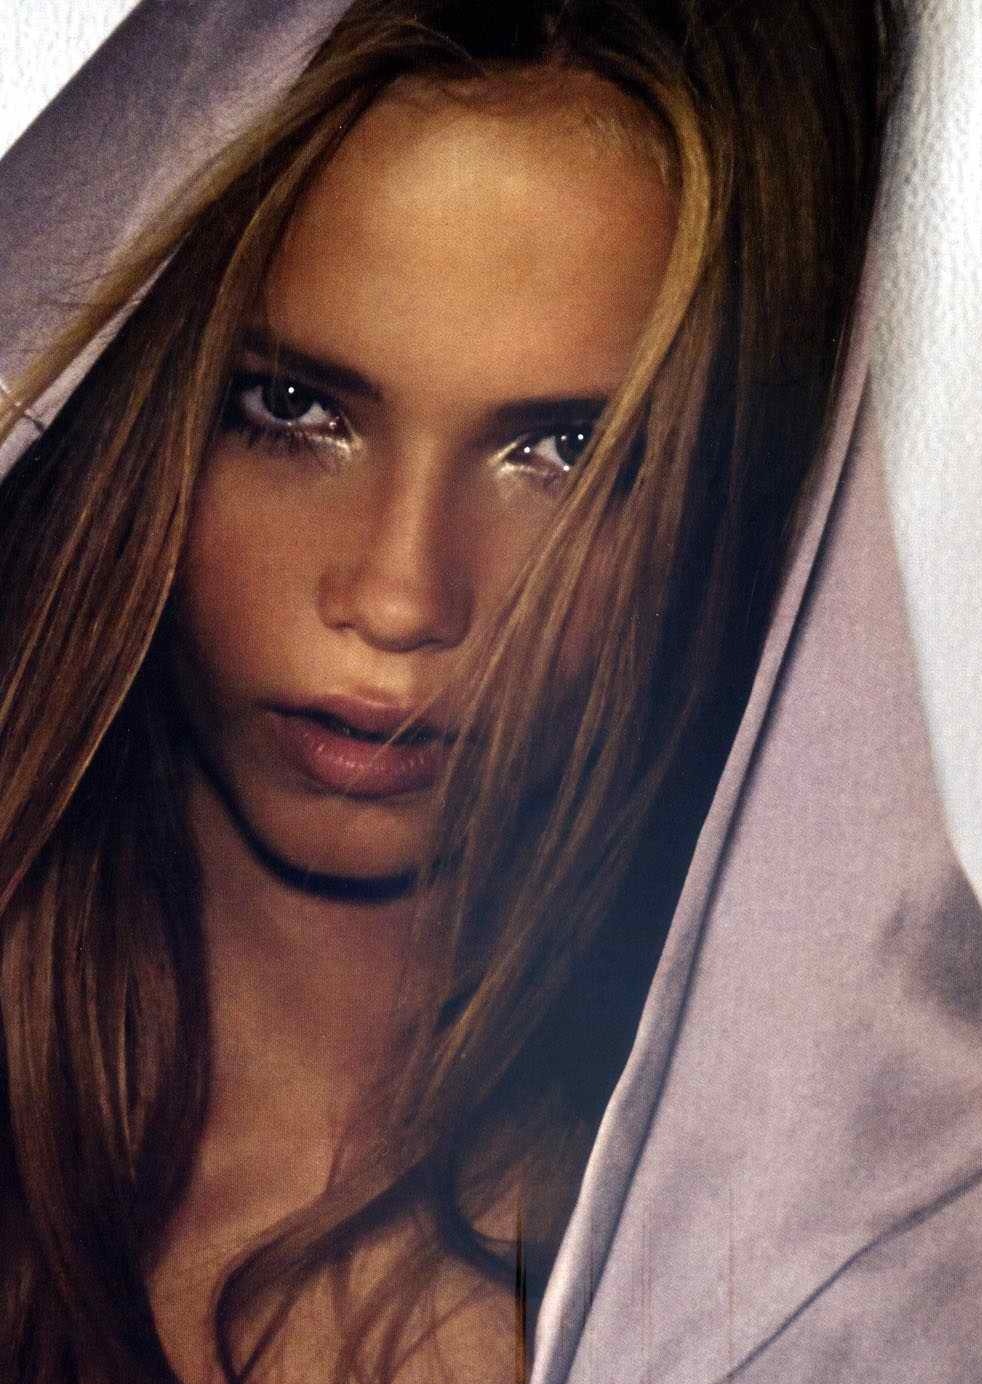 supermodelgif: Natasha Poly for Vogue Australia October 2004 